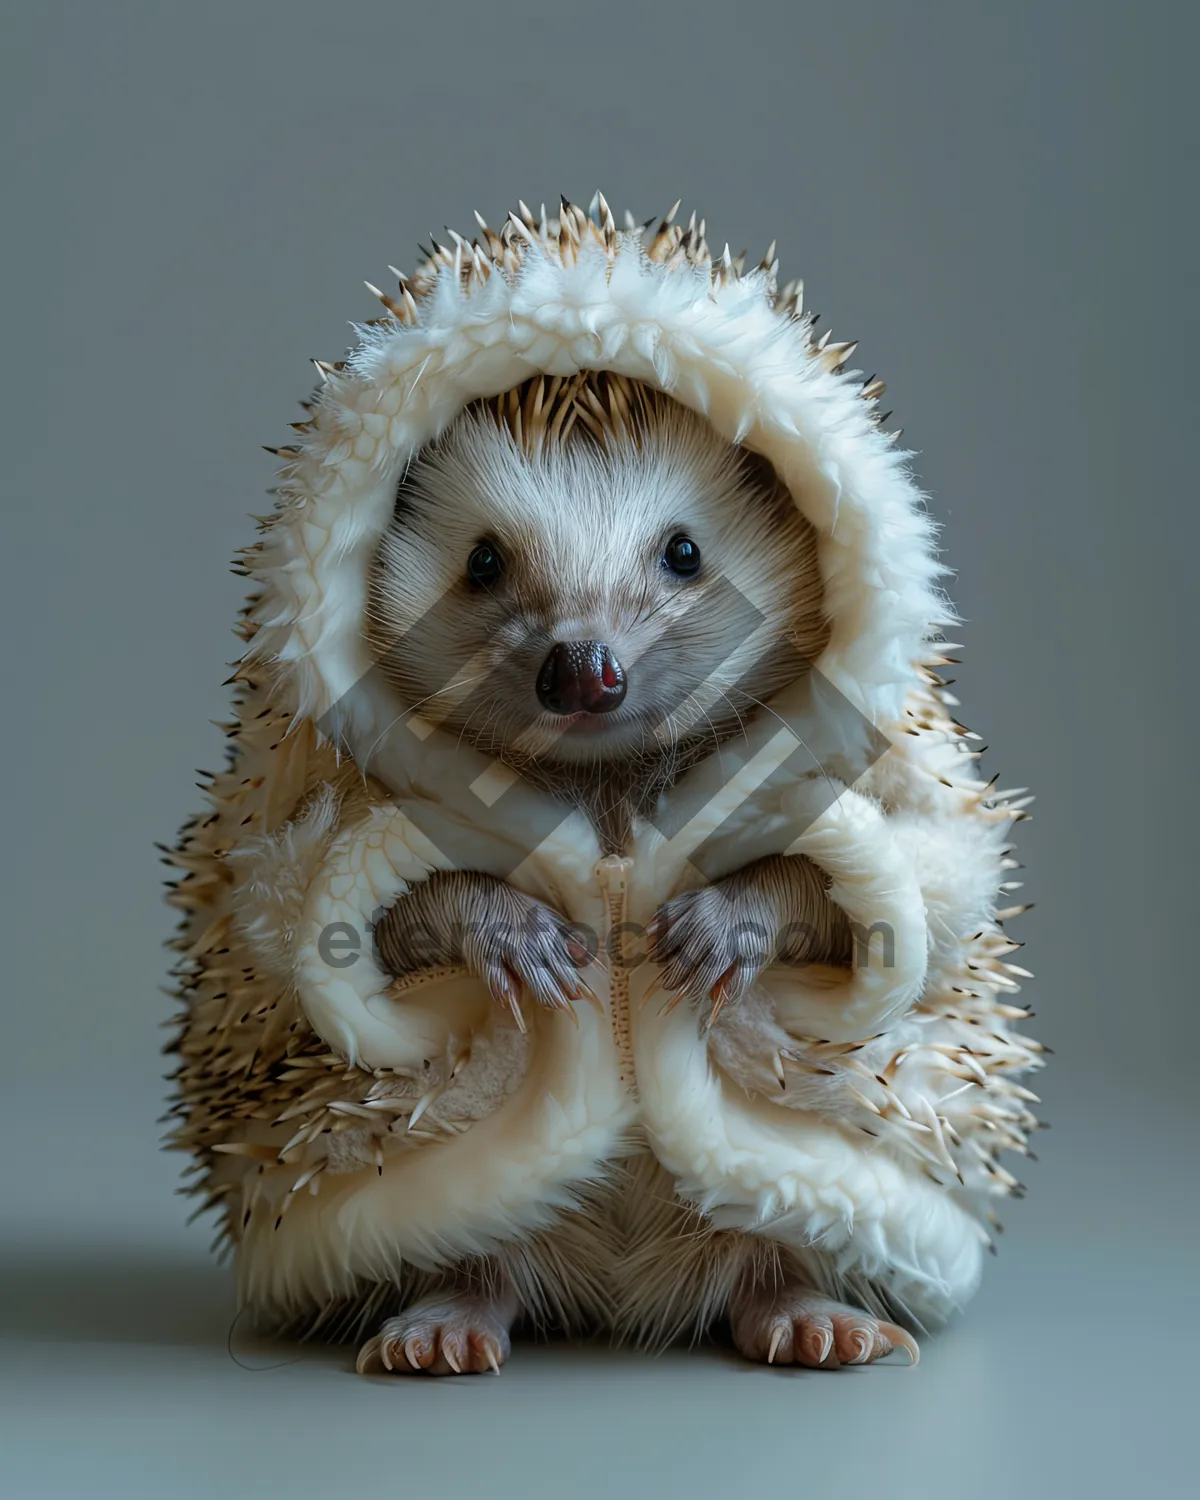 Picture of Porcupine quills hedgehog sharp defense wildlife creature